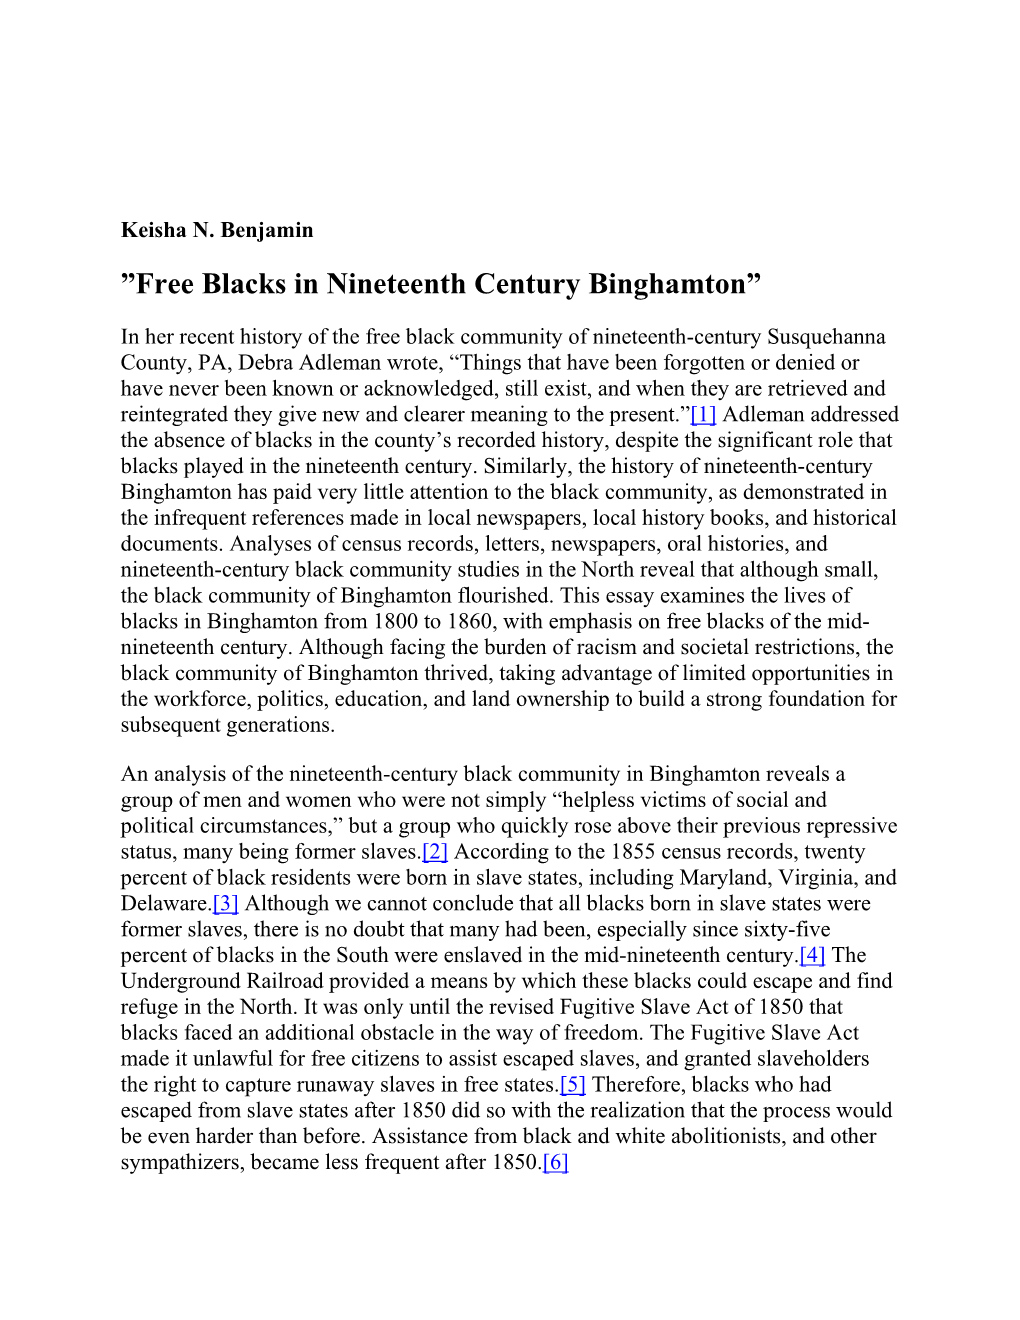 Free Blacks in Nineteenth Century Binghamton”